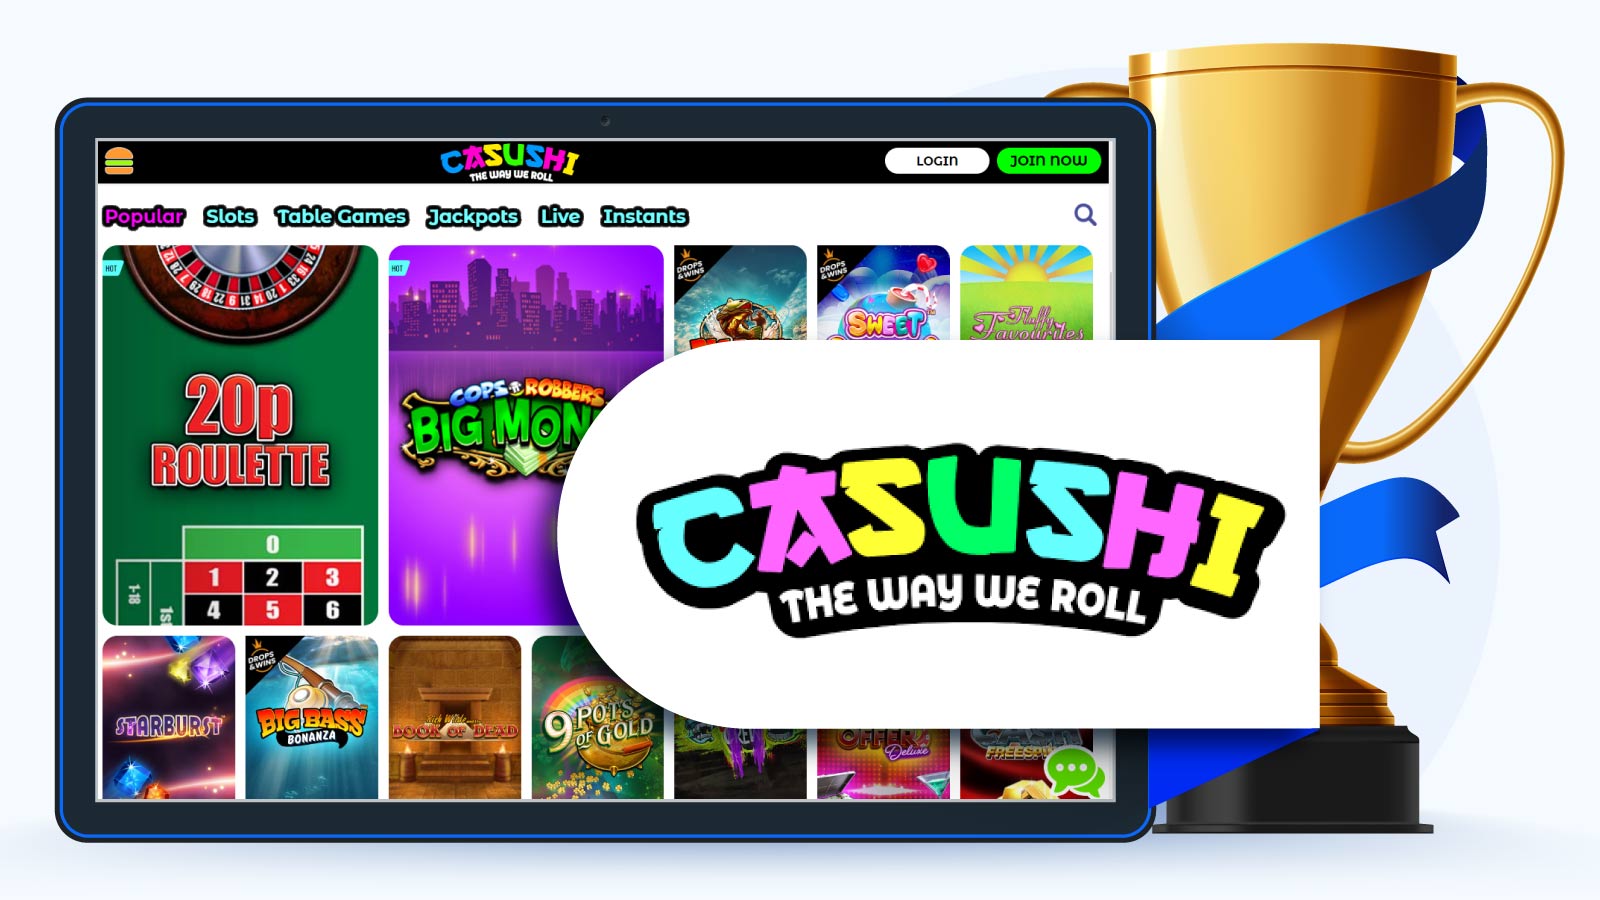 Casushi Casino – Best PayPal Casino UK